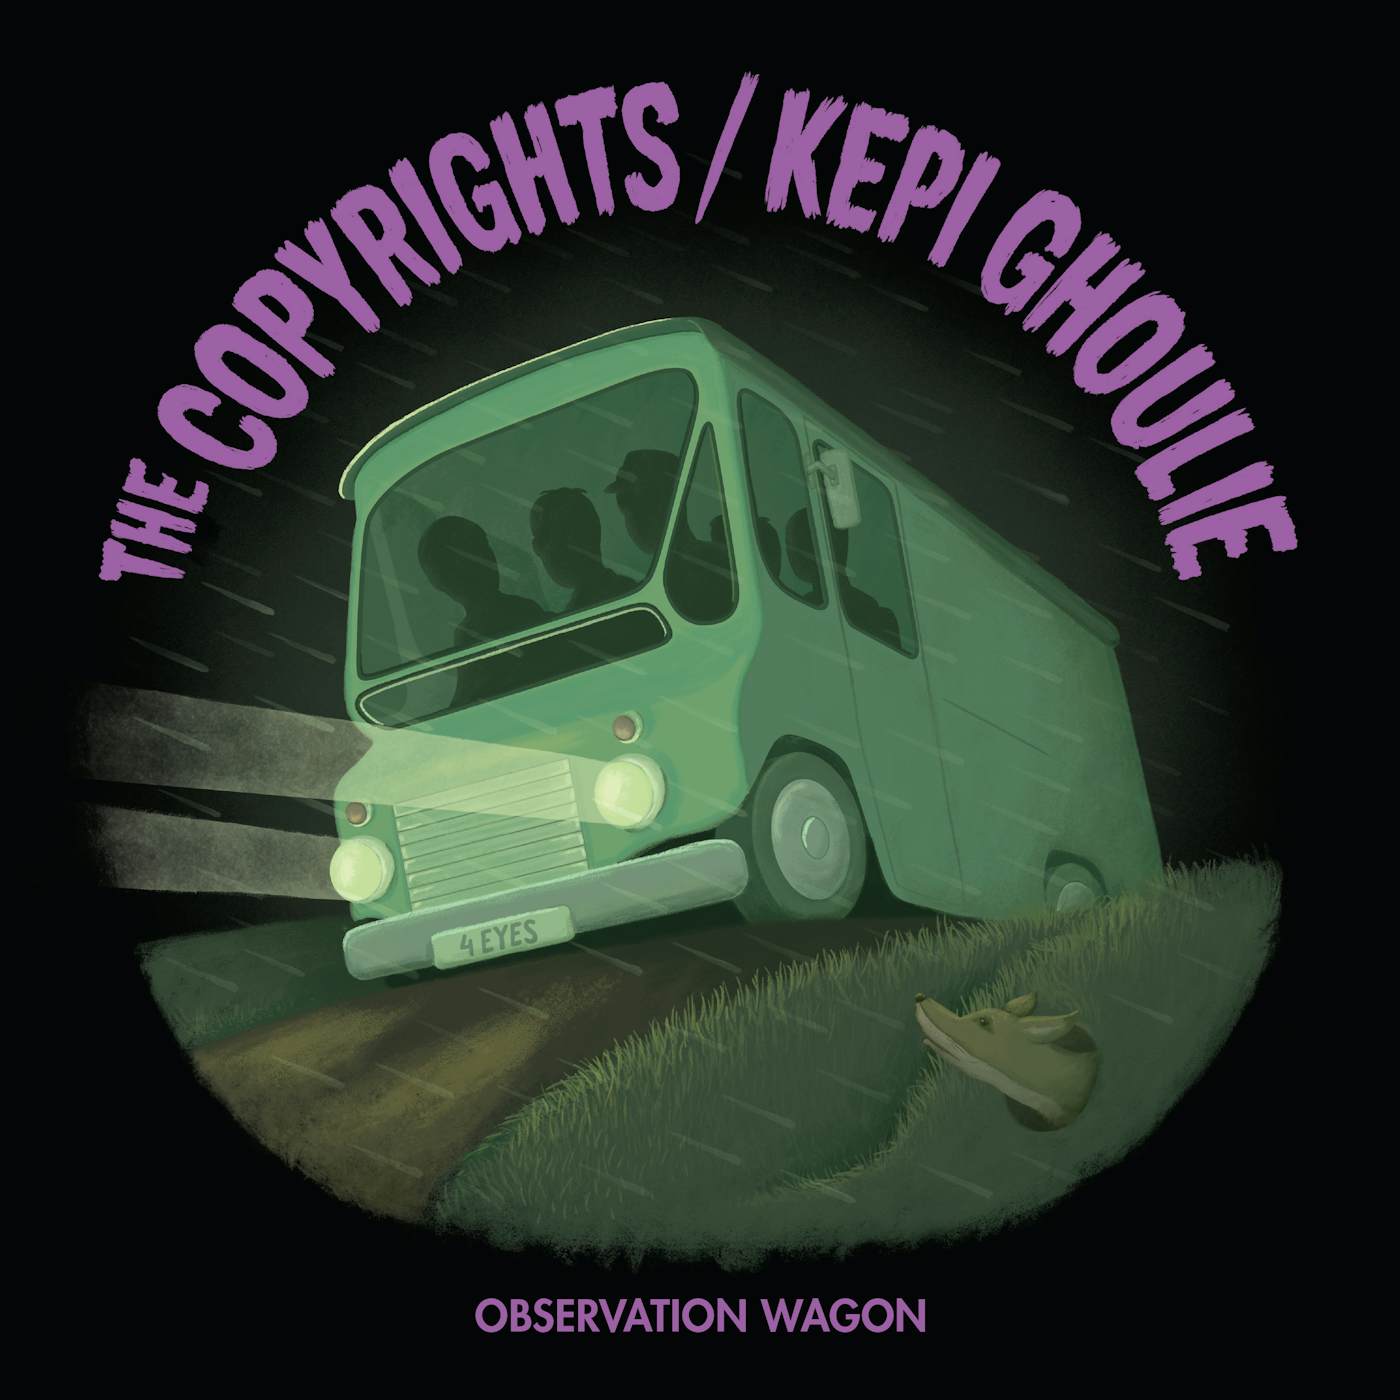 The Copyrights Obersrvation Wagon Vinyl Record